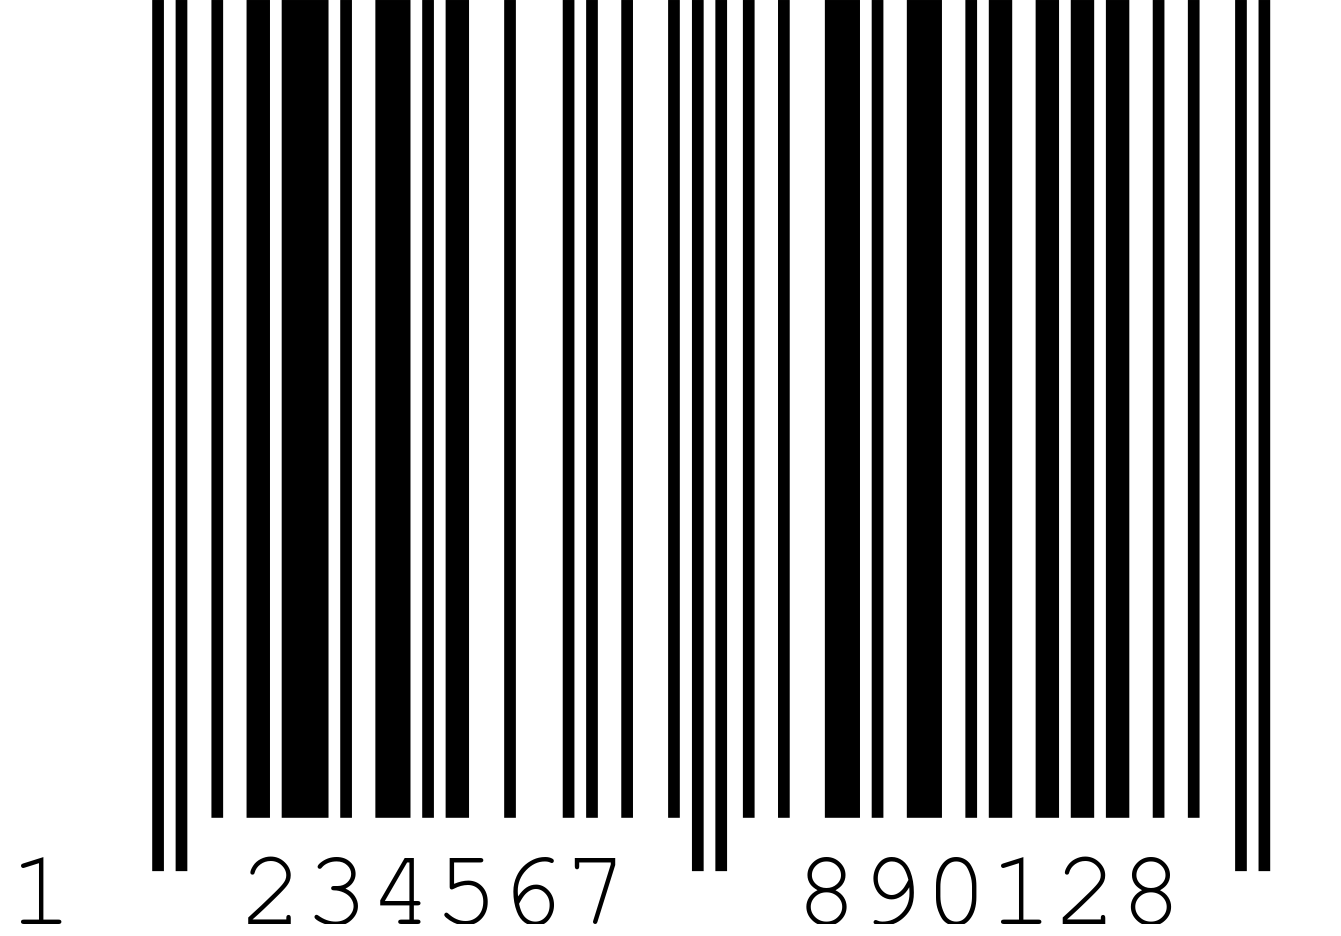 Étiquette de prix Original / Codes à Barres / ean-13